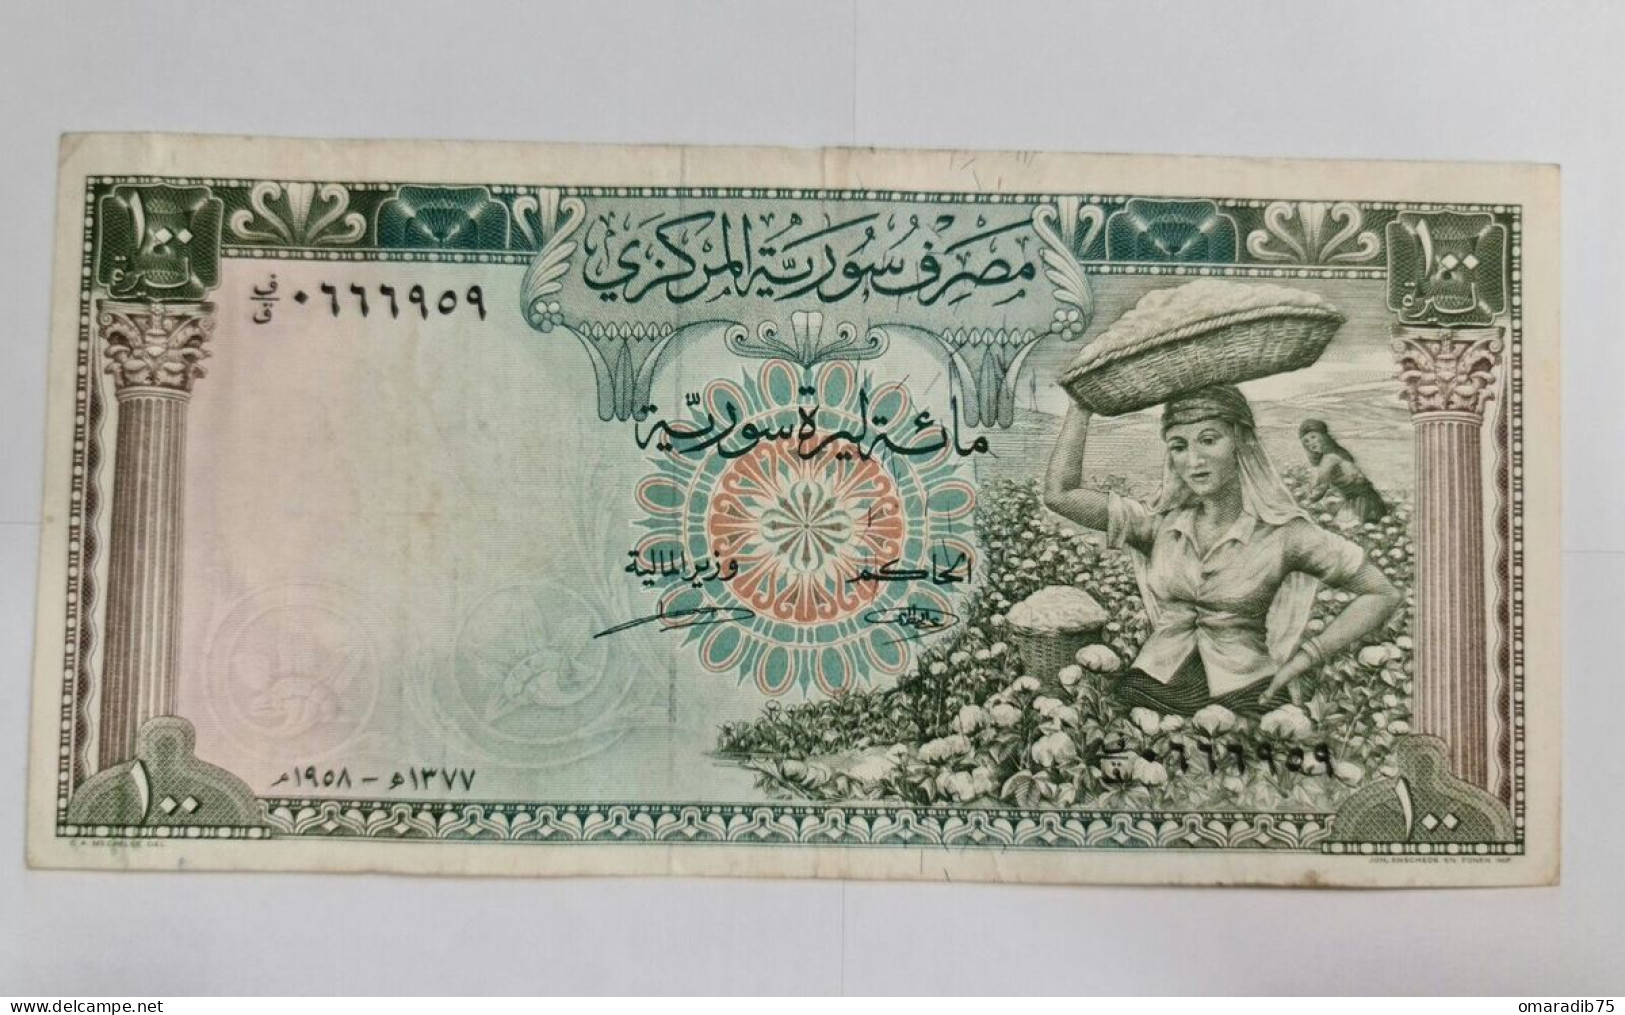 S Y R I E, Billet 100 LIVRES 1958 - Syrie